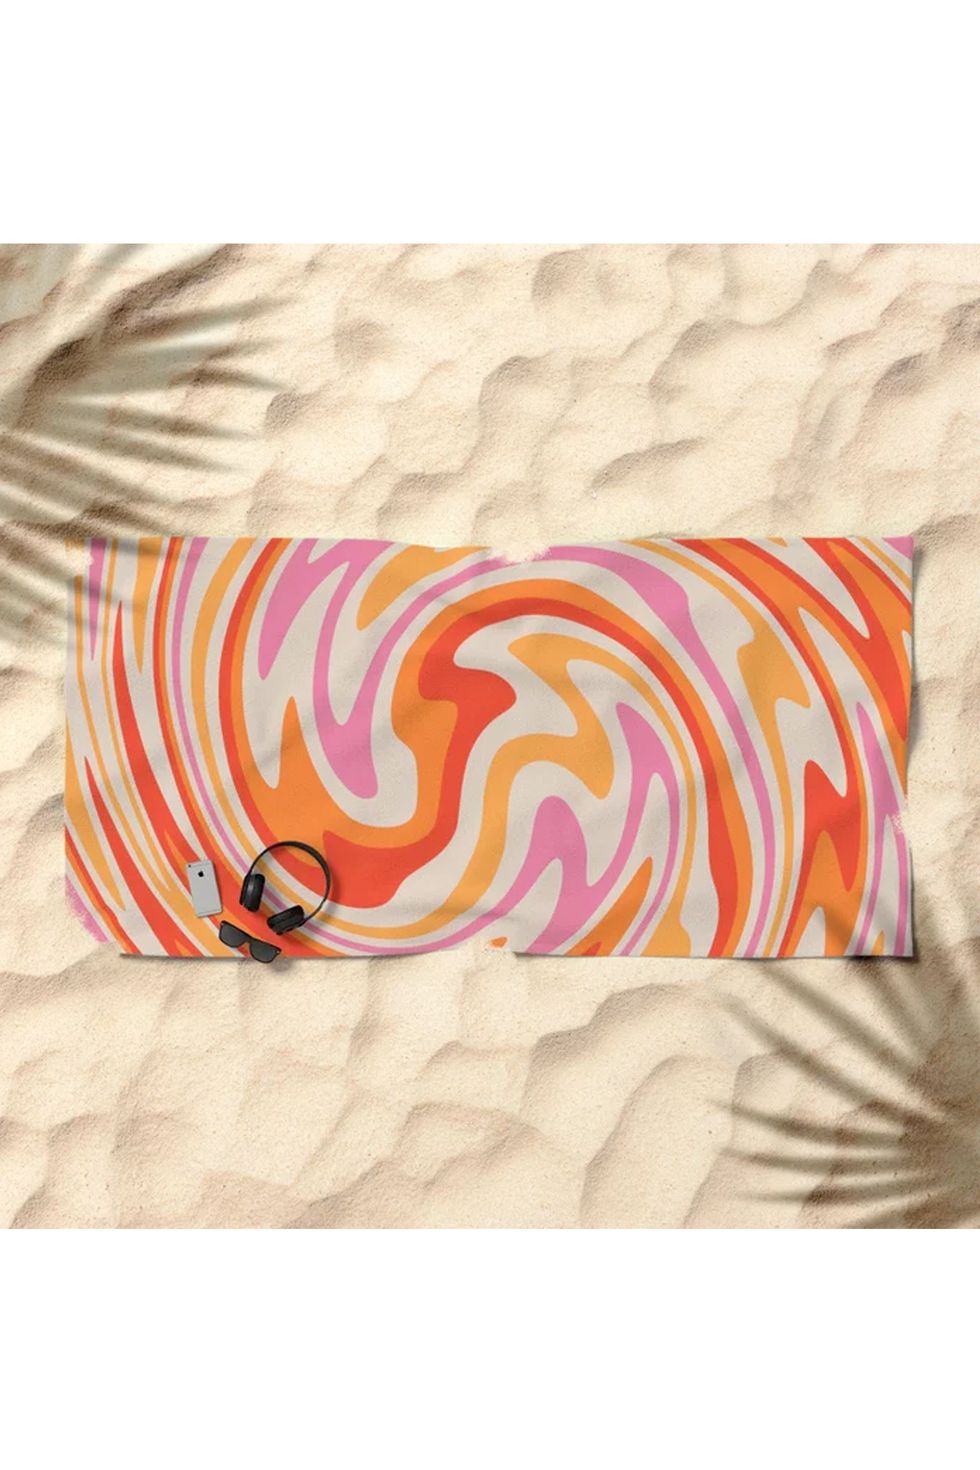 70s Retro Swirl Color Abstract Beach Towel